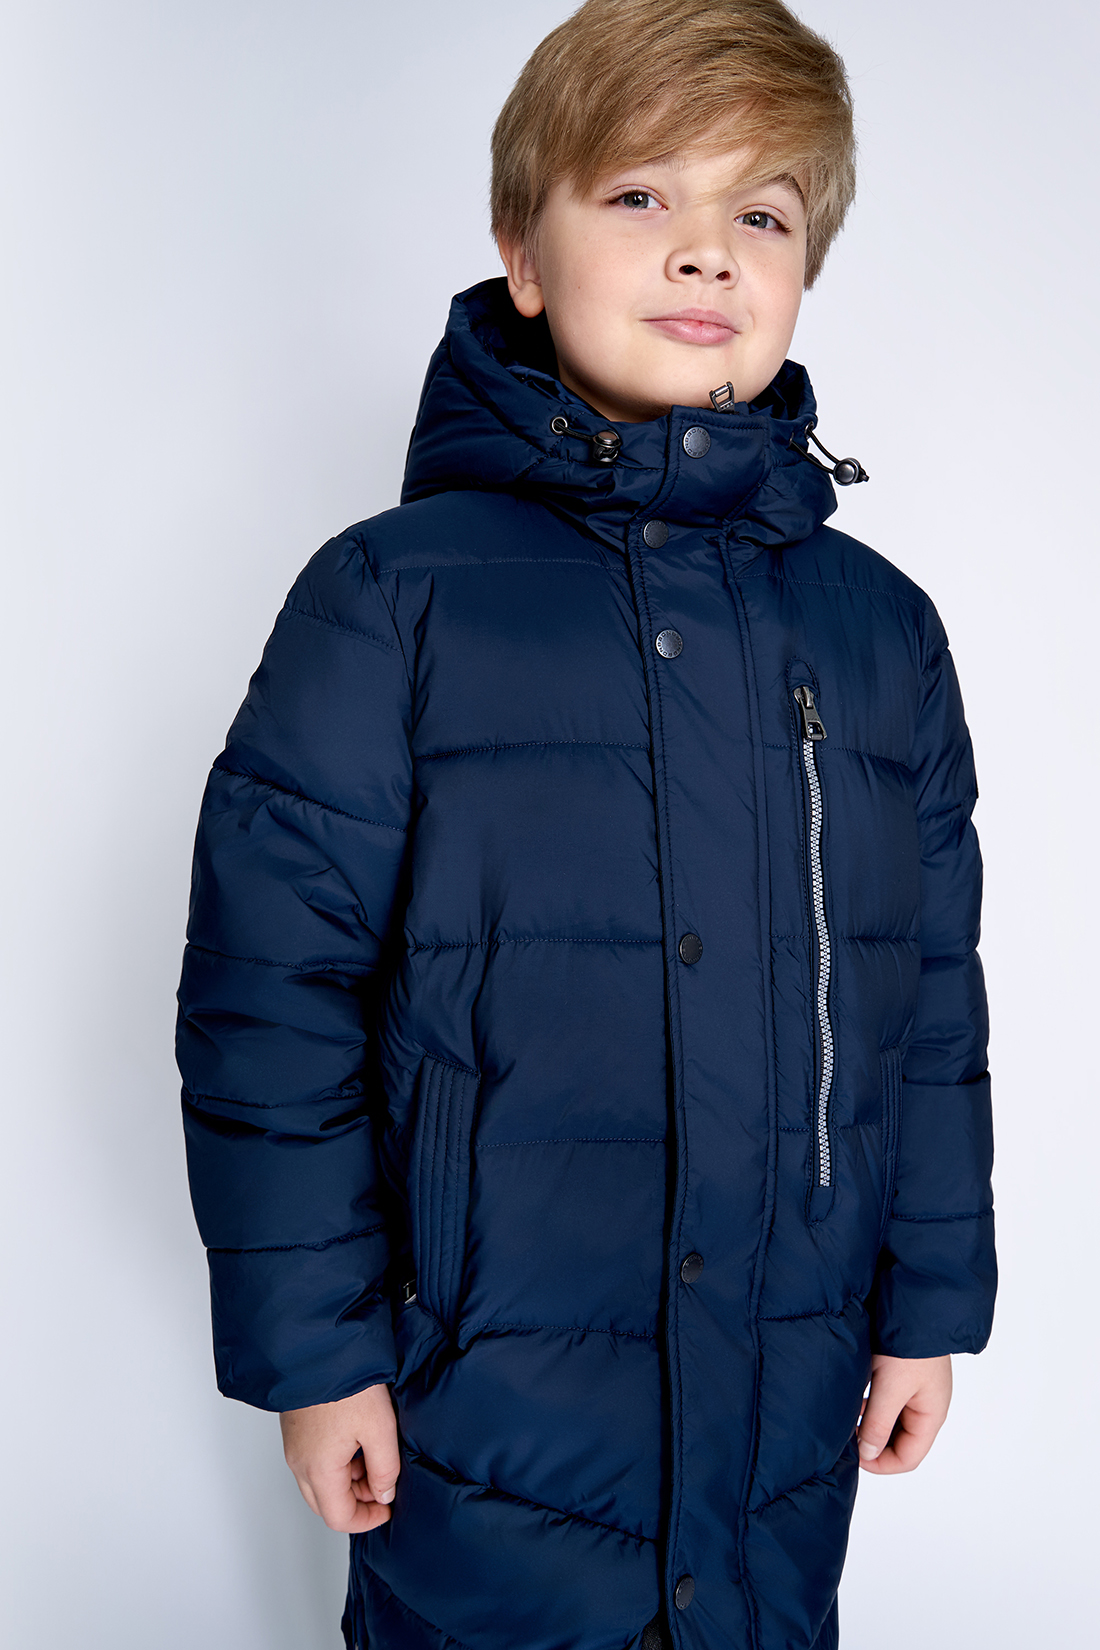 Длинная куртка для мальчика (арт. baon BK539505), размер 110, цвет синий Длинная куртка для мальчика (арт. baon BK539505) - фото 3